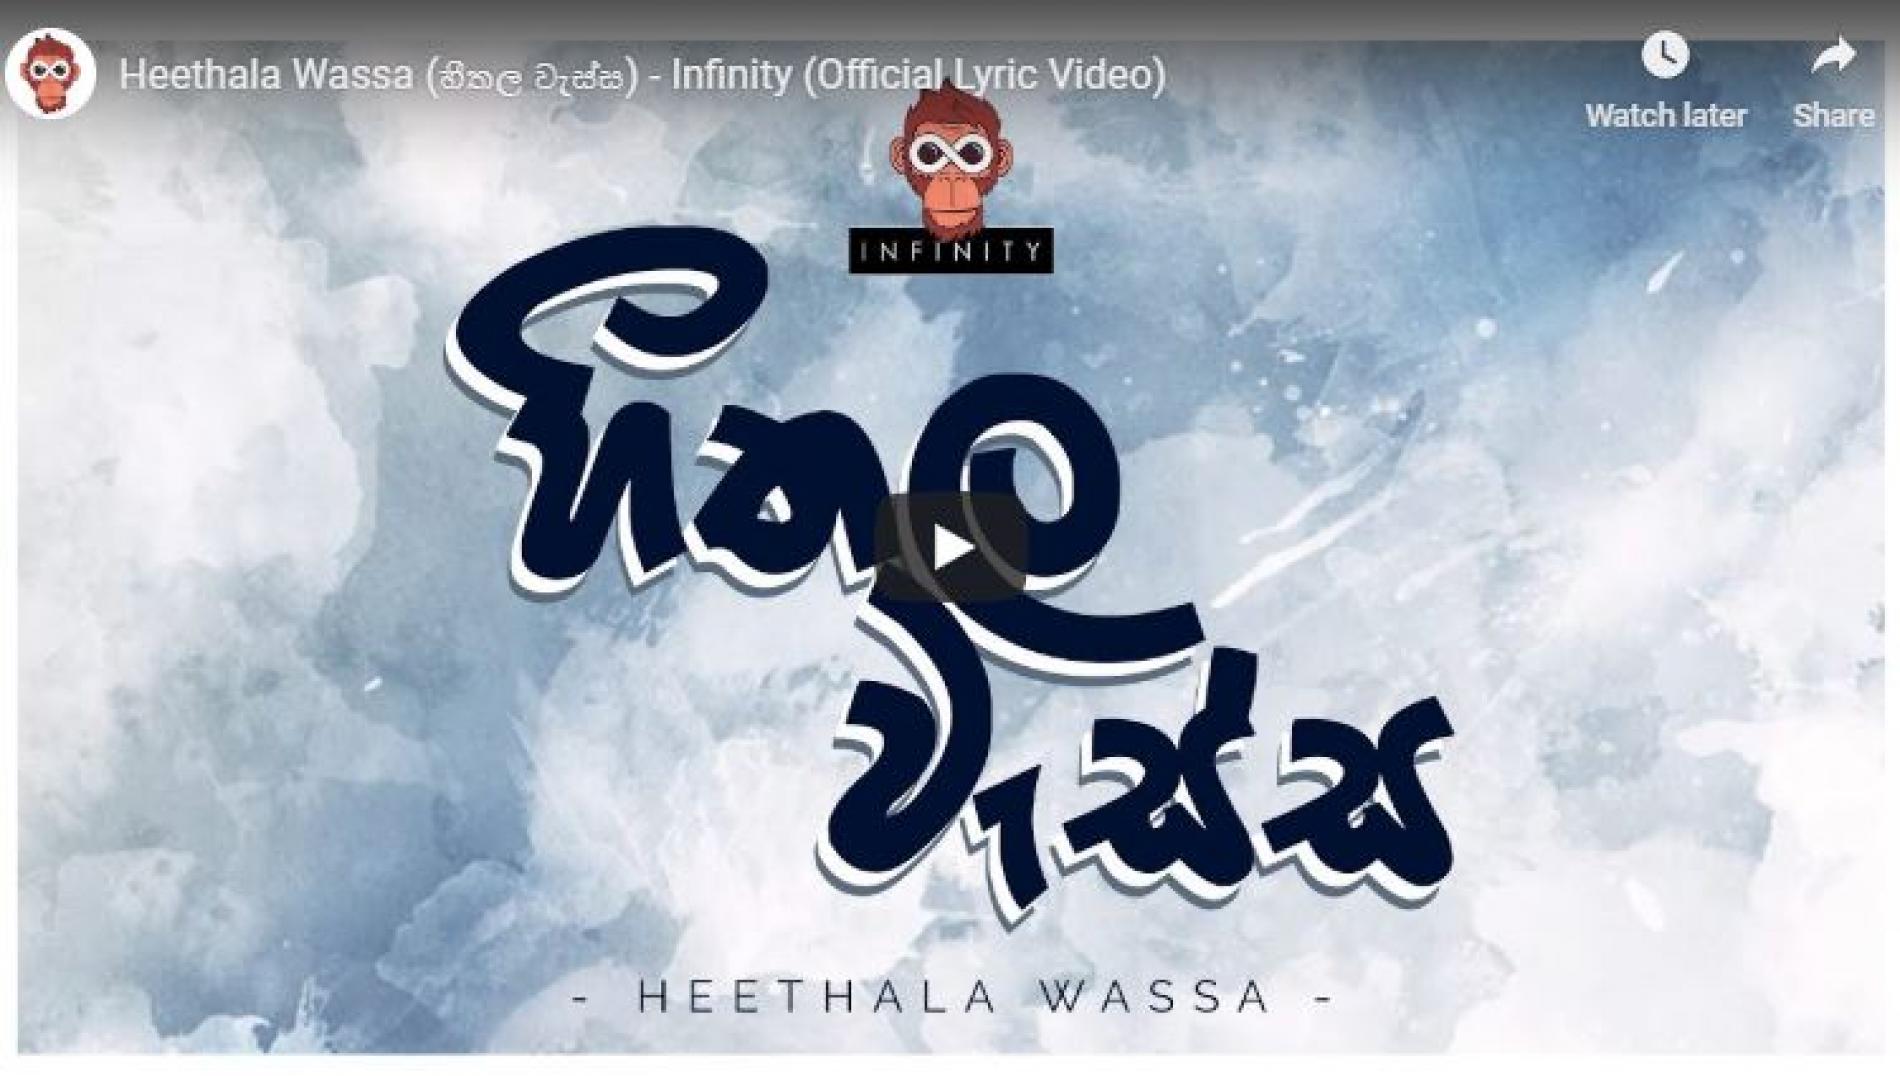 Heethala Wassa (හීතල වැස්ස) – Infinity (Official Lyric Video)